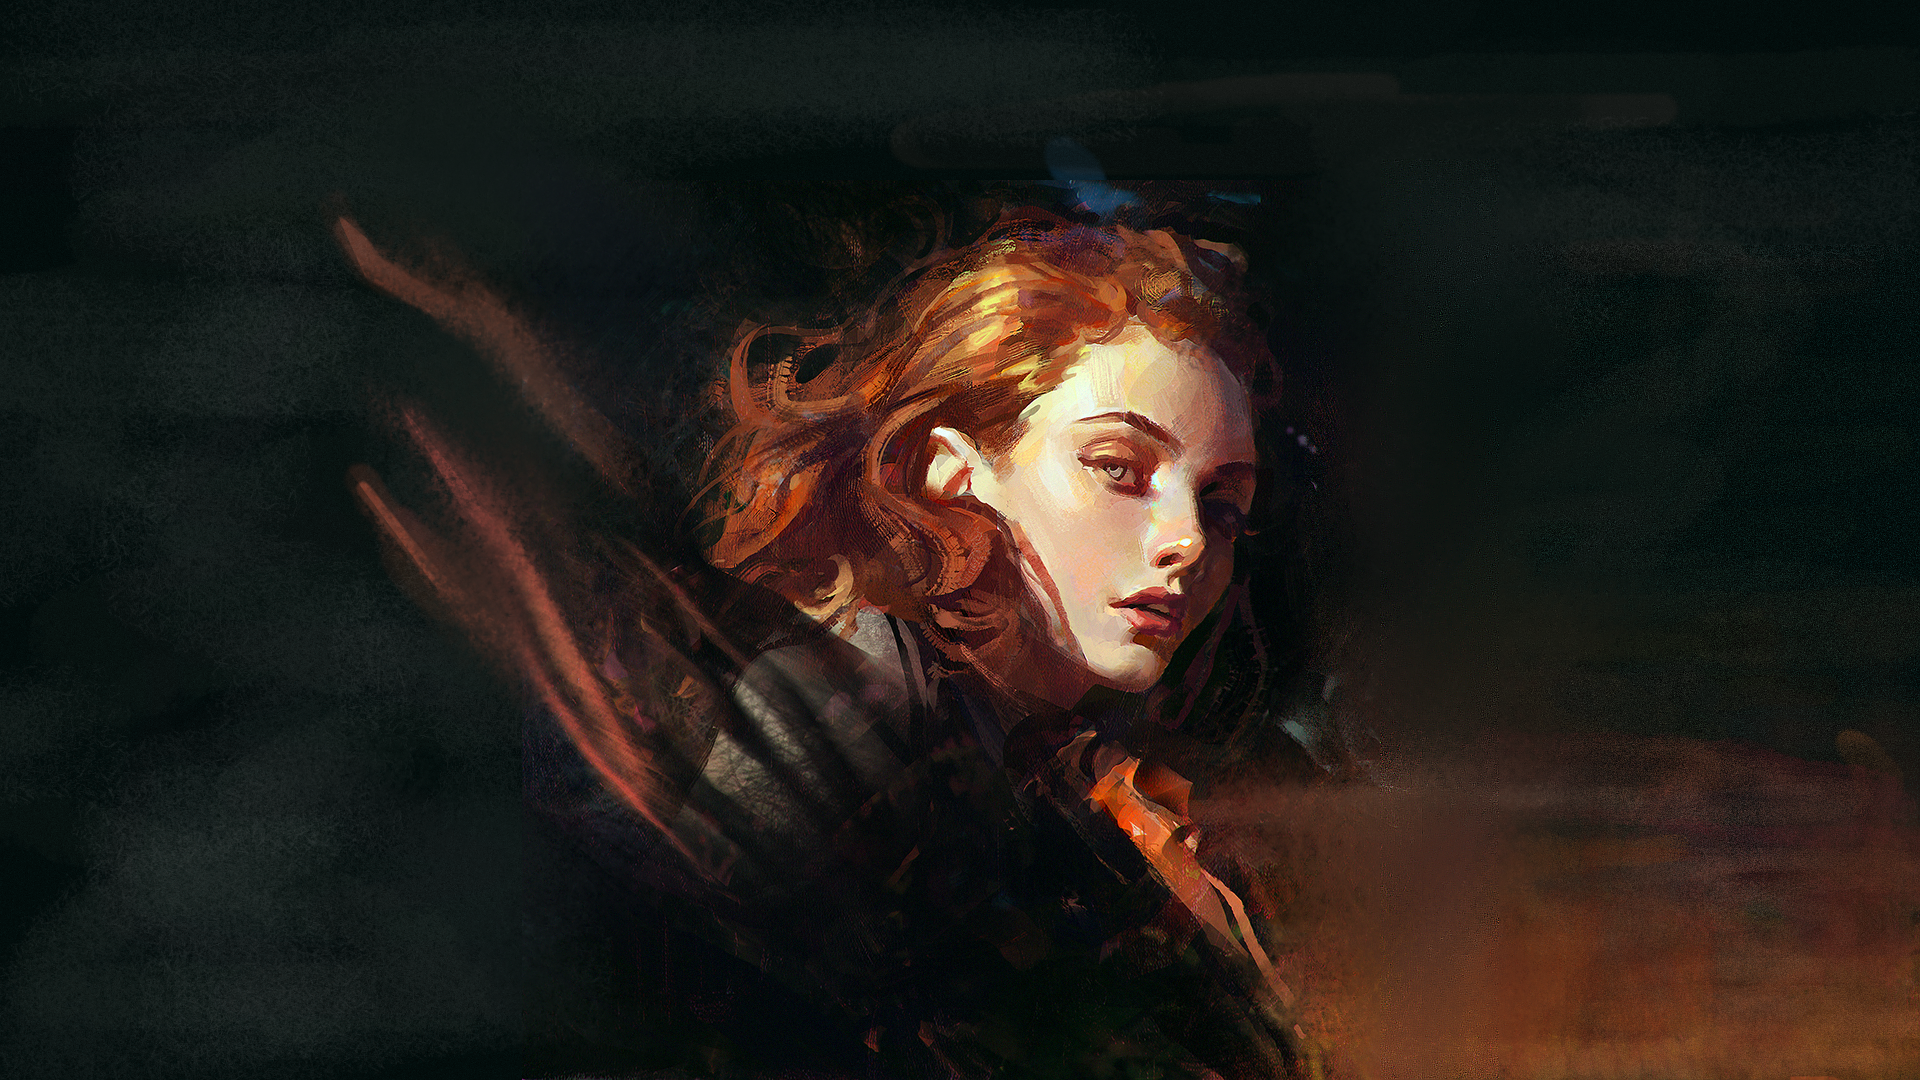 General 1920x1080 digital art fantasy art artwork women Game of Thrones Sansa Stark redhead dress